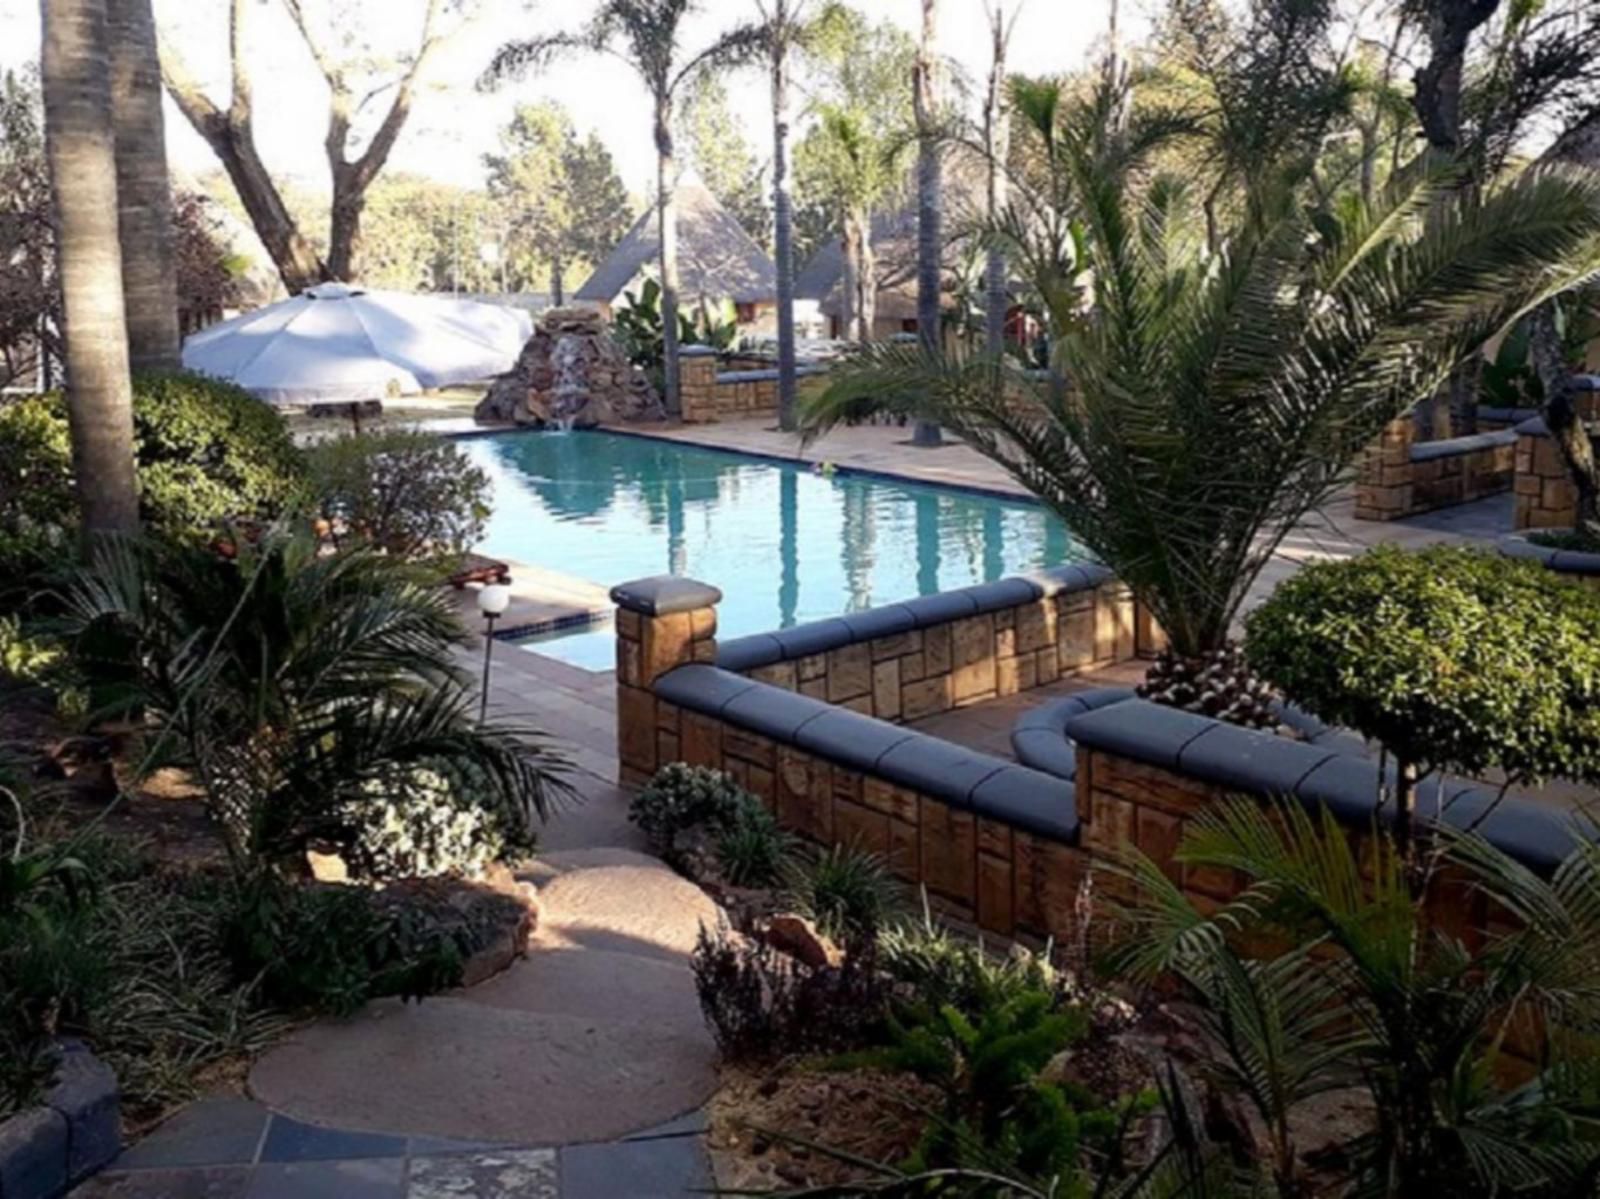 Das Landhaus Guest Lodge Dainfern Johannesburg Gauteng South Africa Garden, Nature, Plant, Swimming Pool